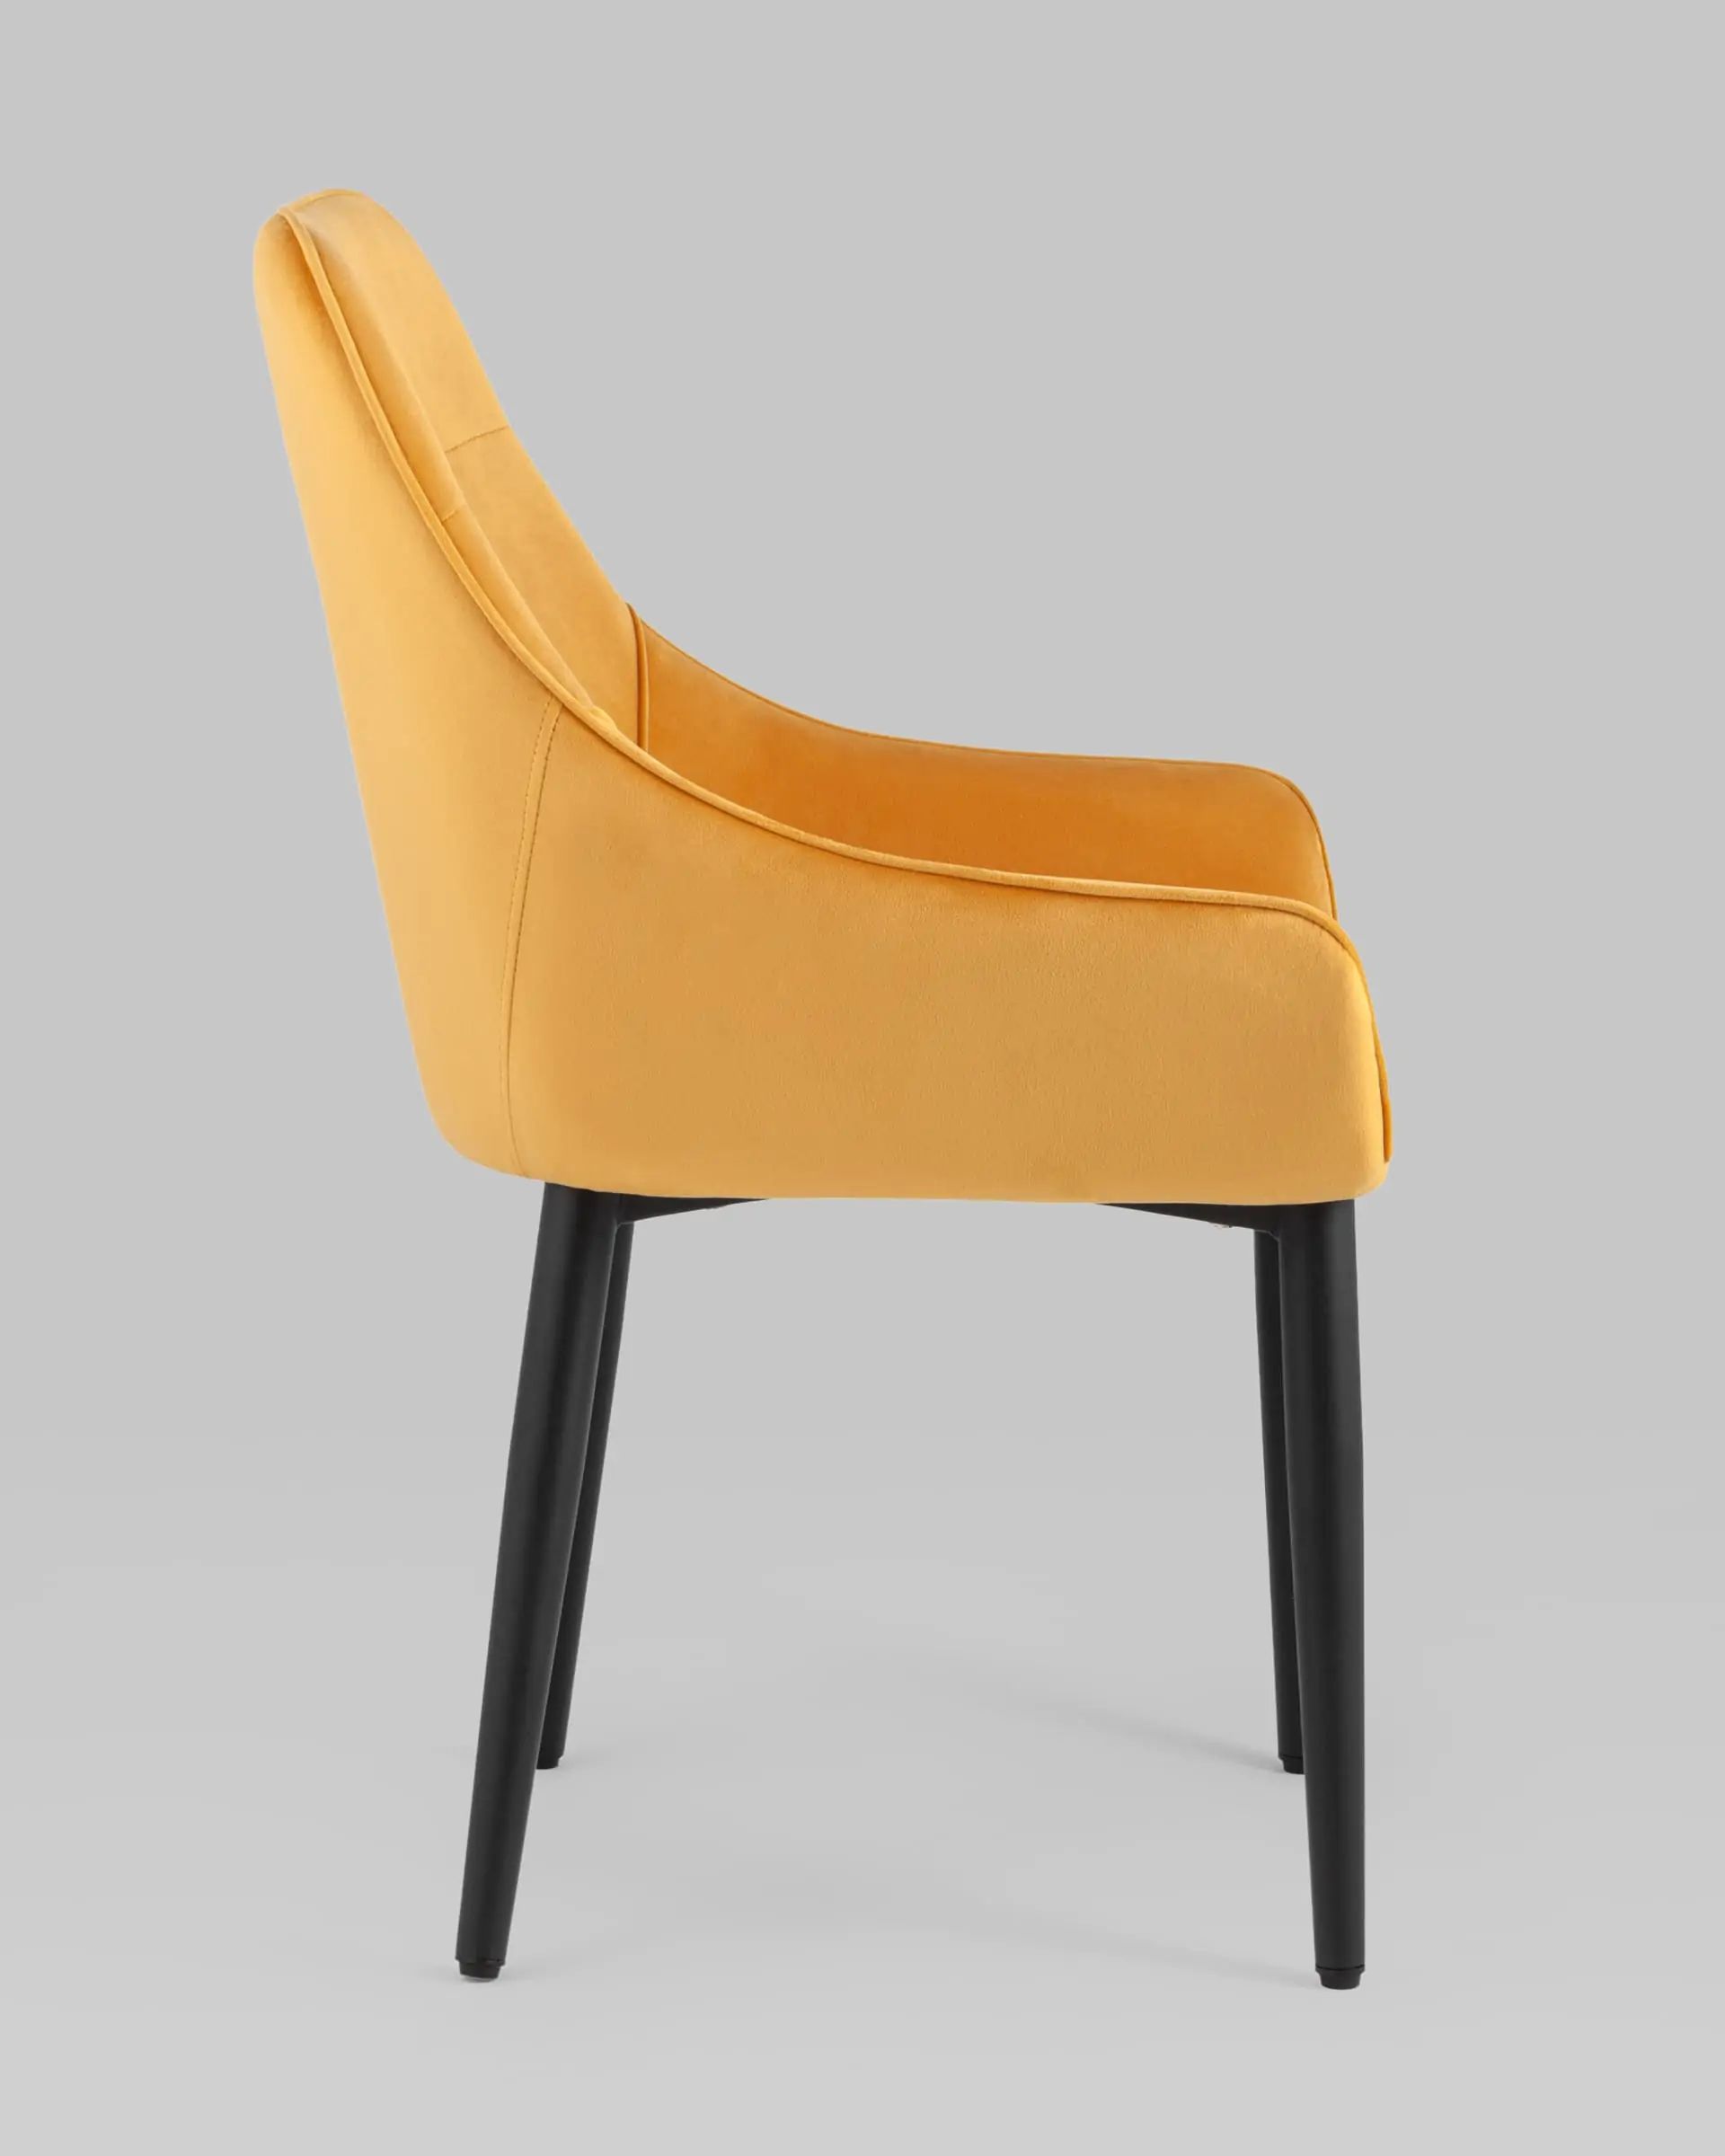 Diana orange chair, velour furniture upholstery